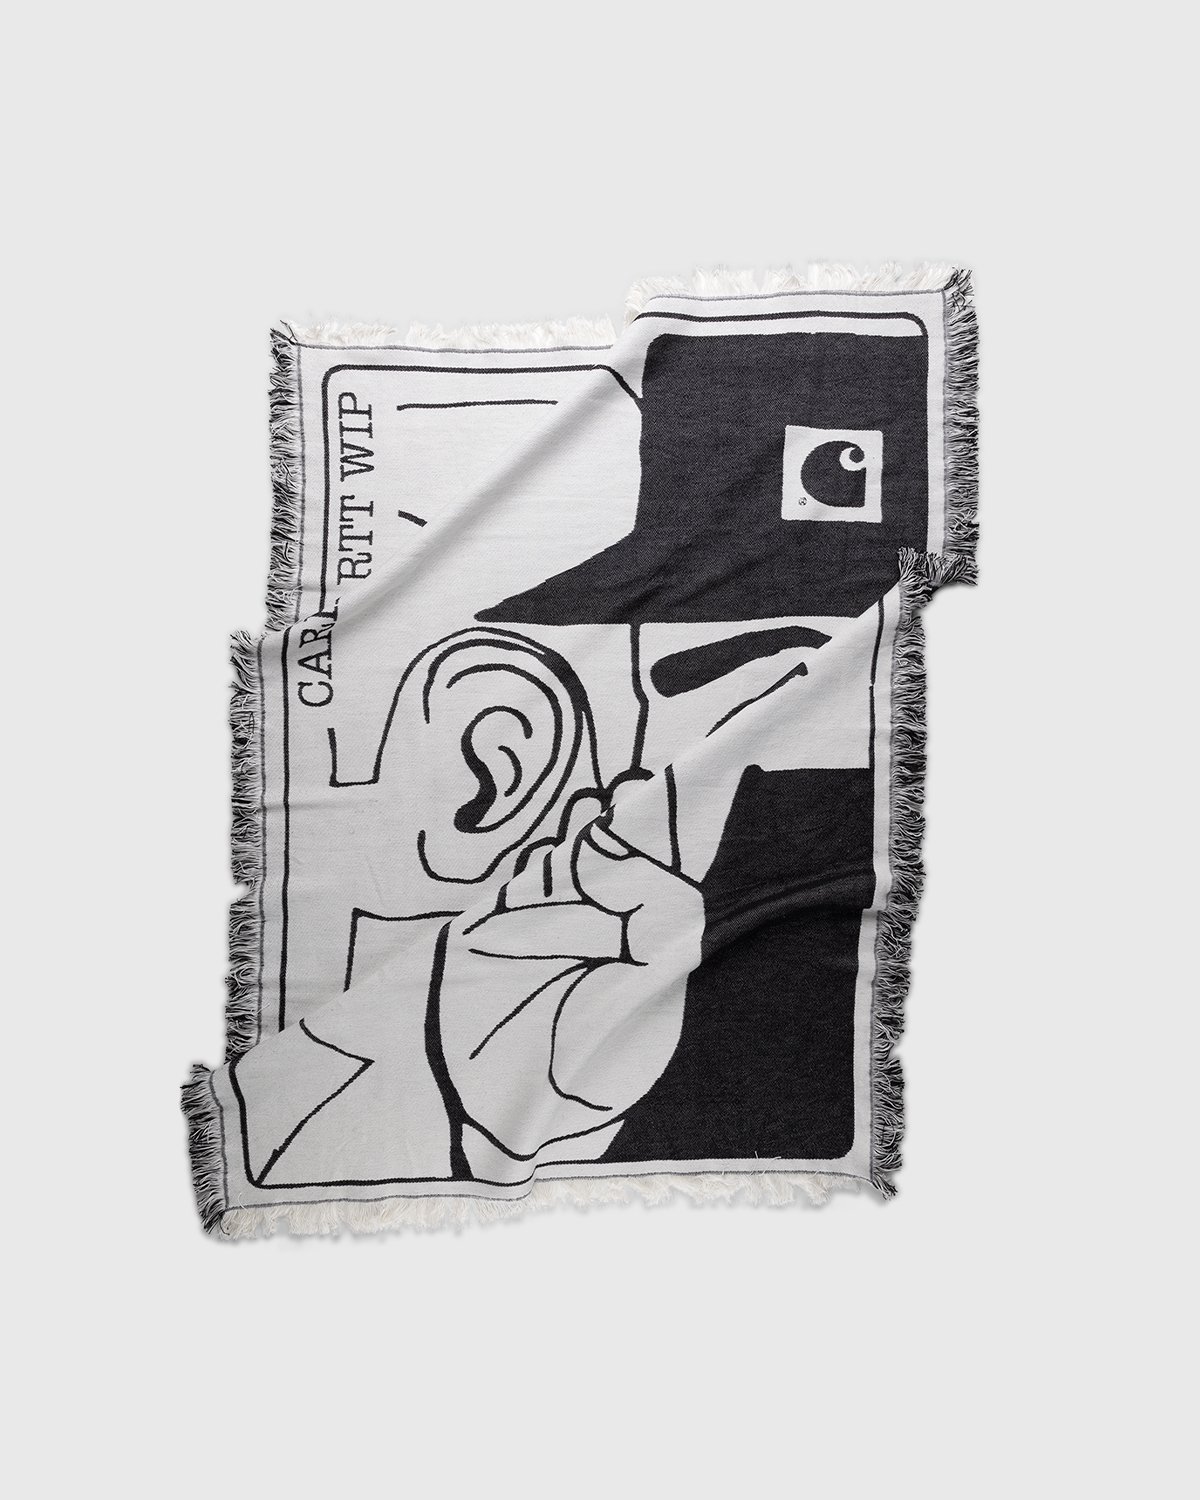 Carhartt WIP - Whisper Woven Blanket Wax Black - Lifestyle - White - Image 2